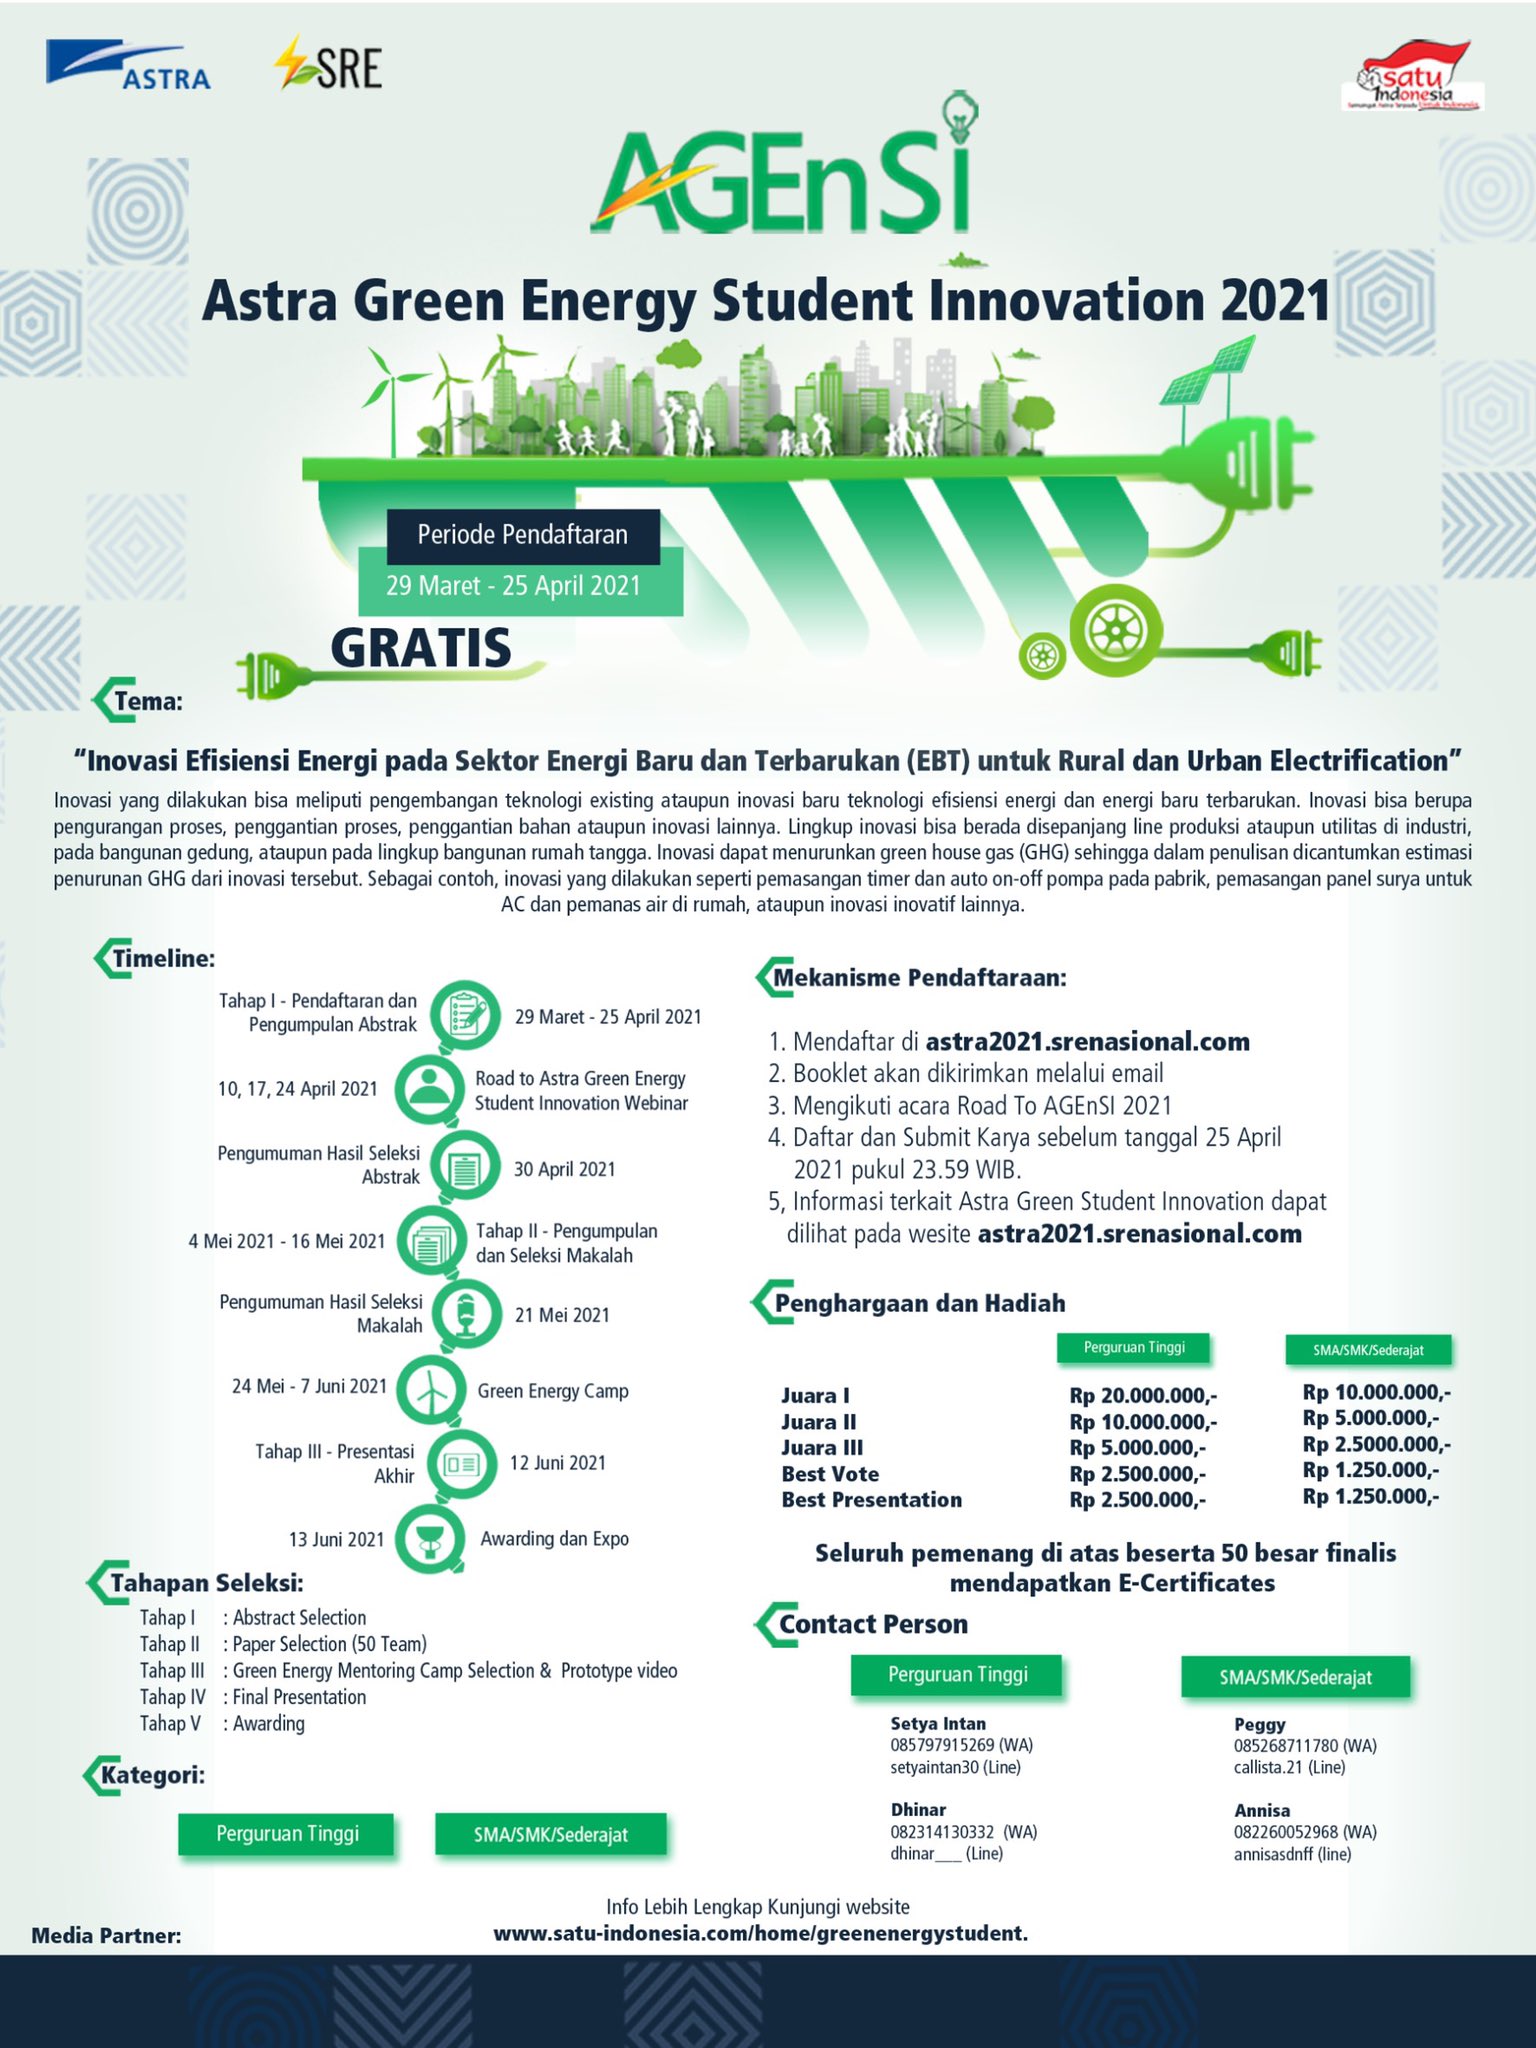 AGEnSI – Astra Green Energy Student Innovation 2021